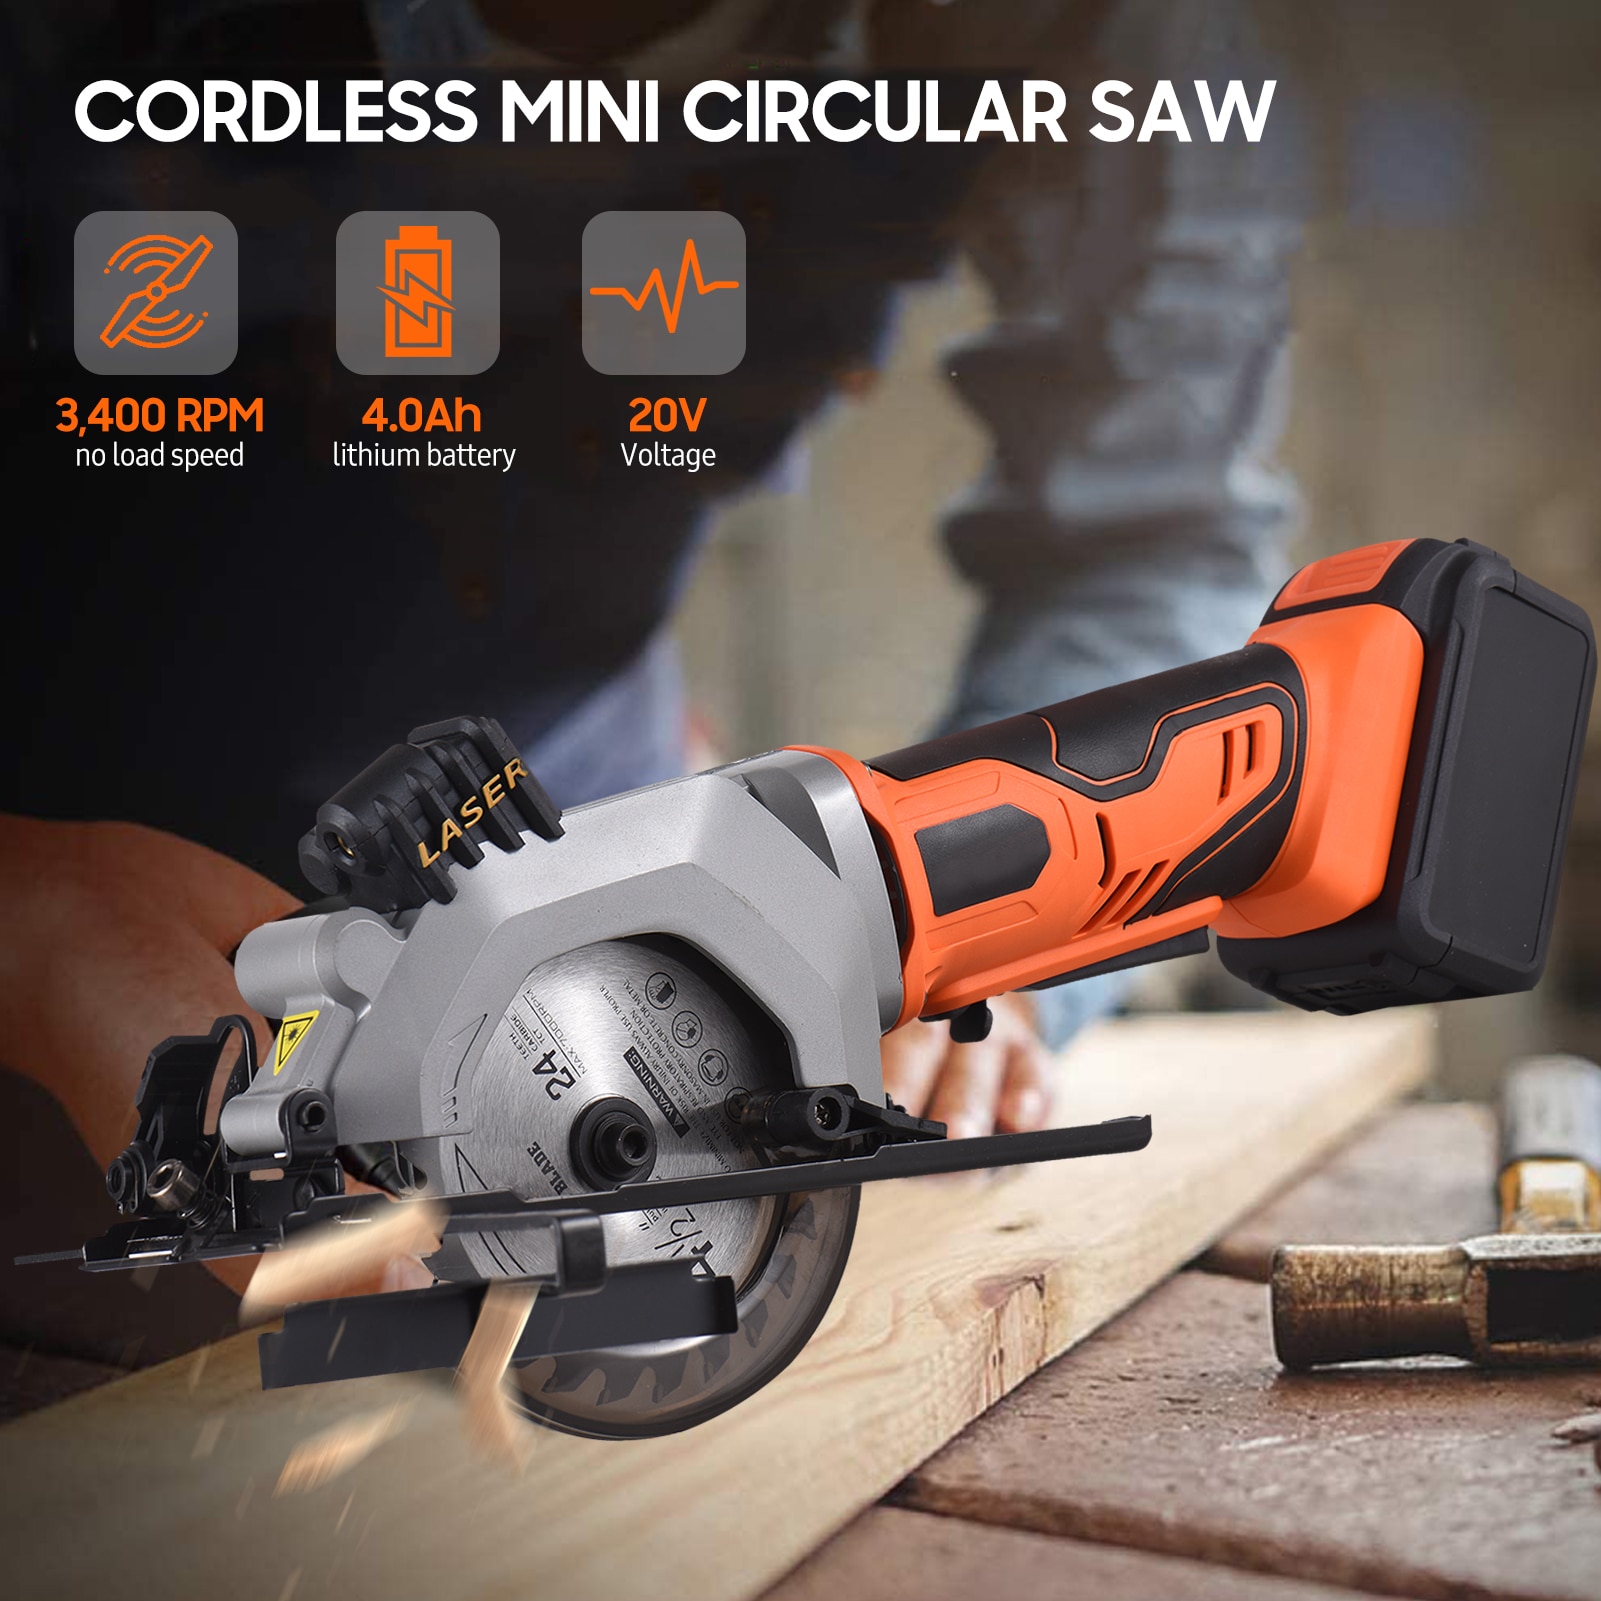 Buy Compact Mini Circular Saw online